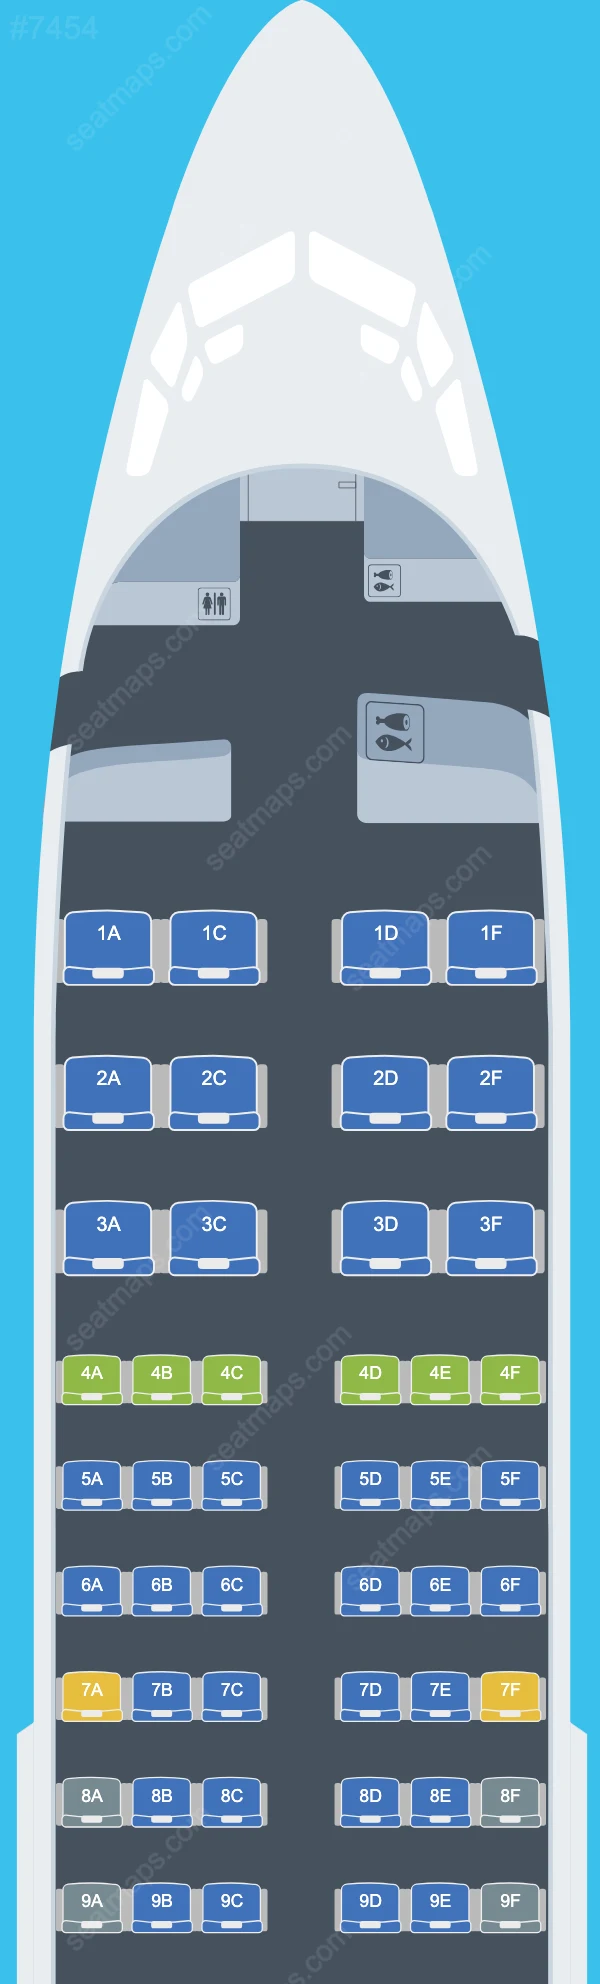 Georgian Airways Boeing 737 Seat Maps 737-700